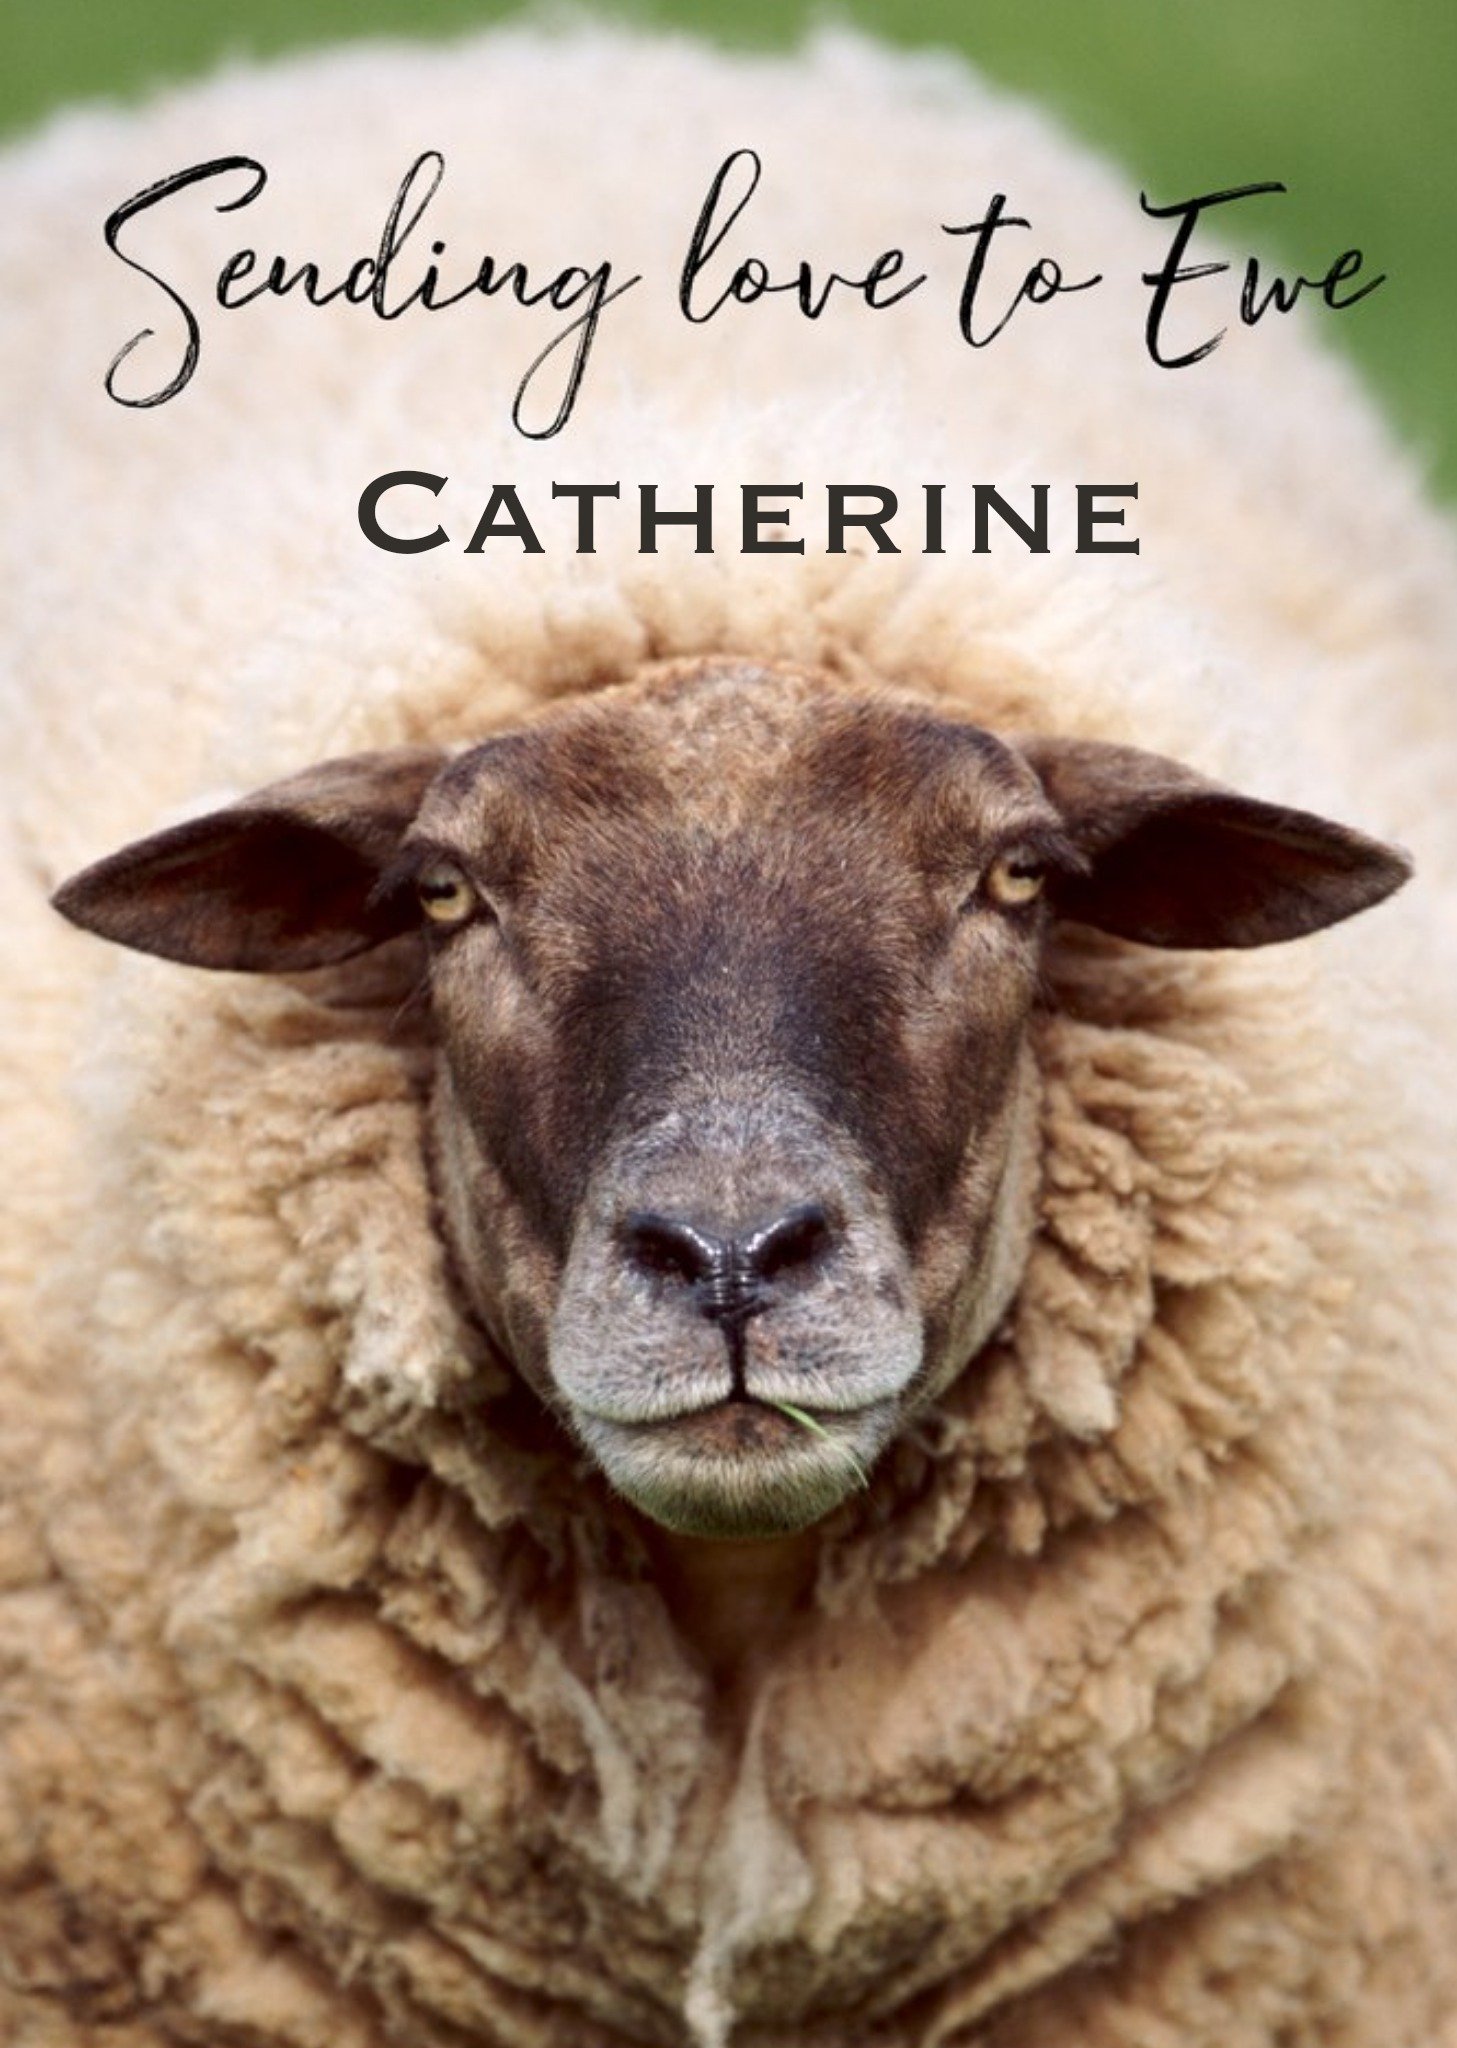 Moonpig Harmonia Ireland Photo Of Sheep Sending Love To Ewe Card, Large